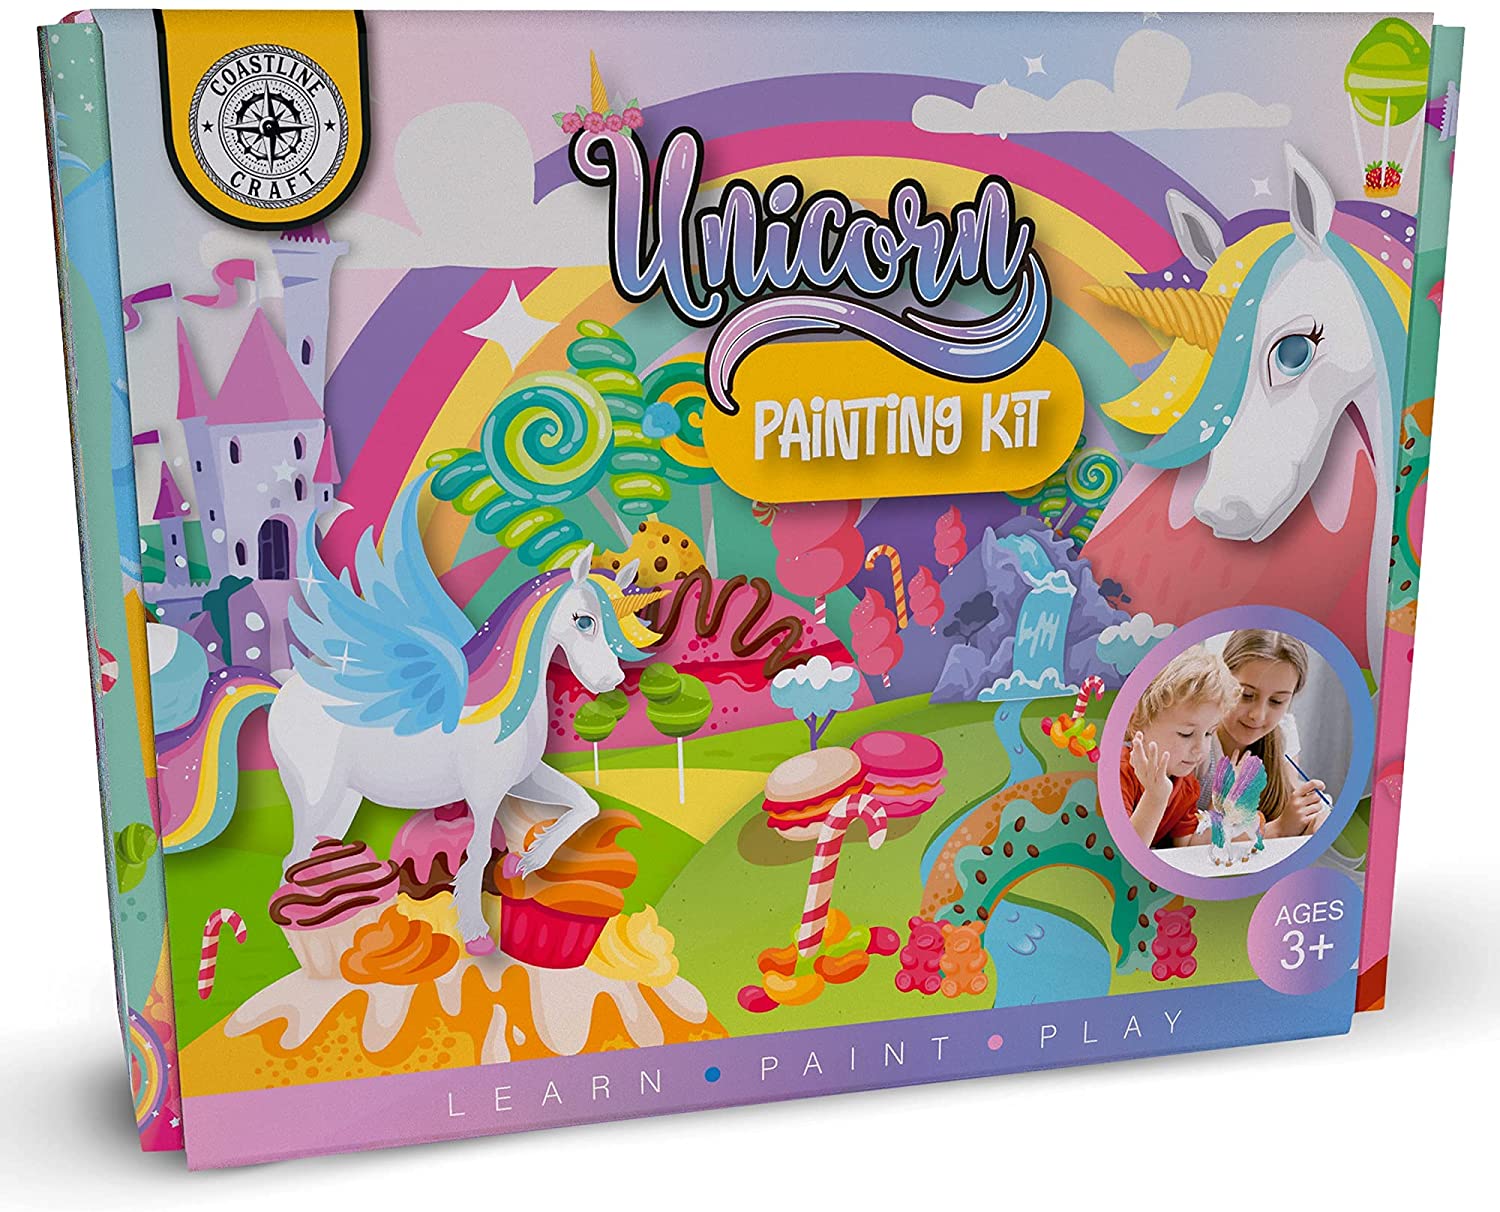 STEM-Accredited Unicorn Painting Kit for Kids - Paint Your Own Unicorn  Craft Kit Toys w 2 Unicorn Headbands, Pegasus, Alicorn & Paint Sets for  Kids